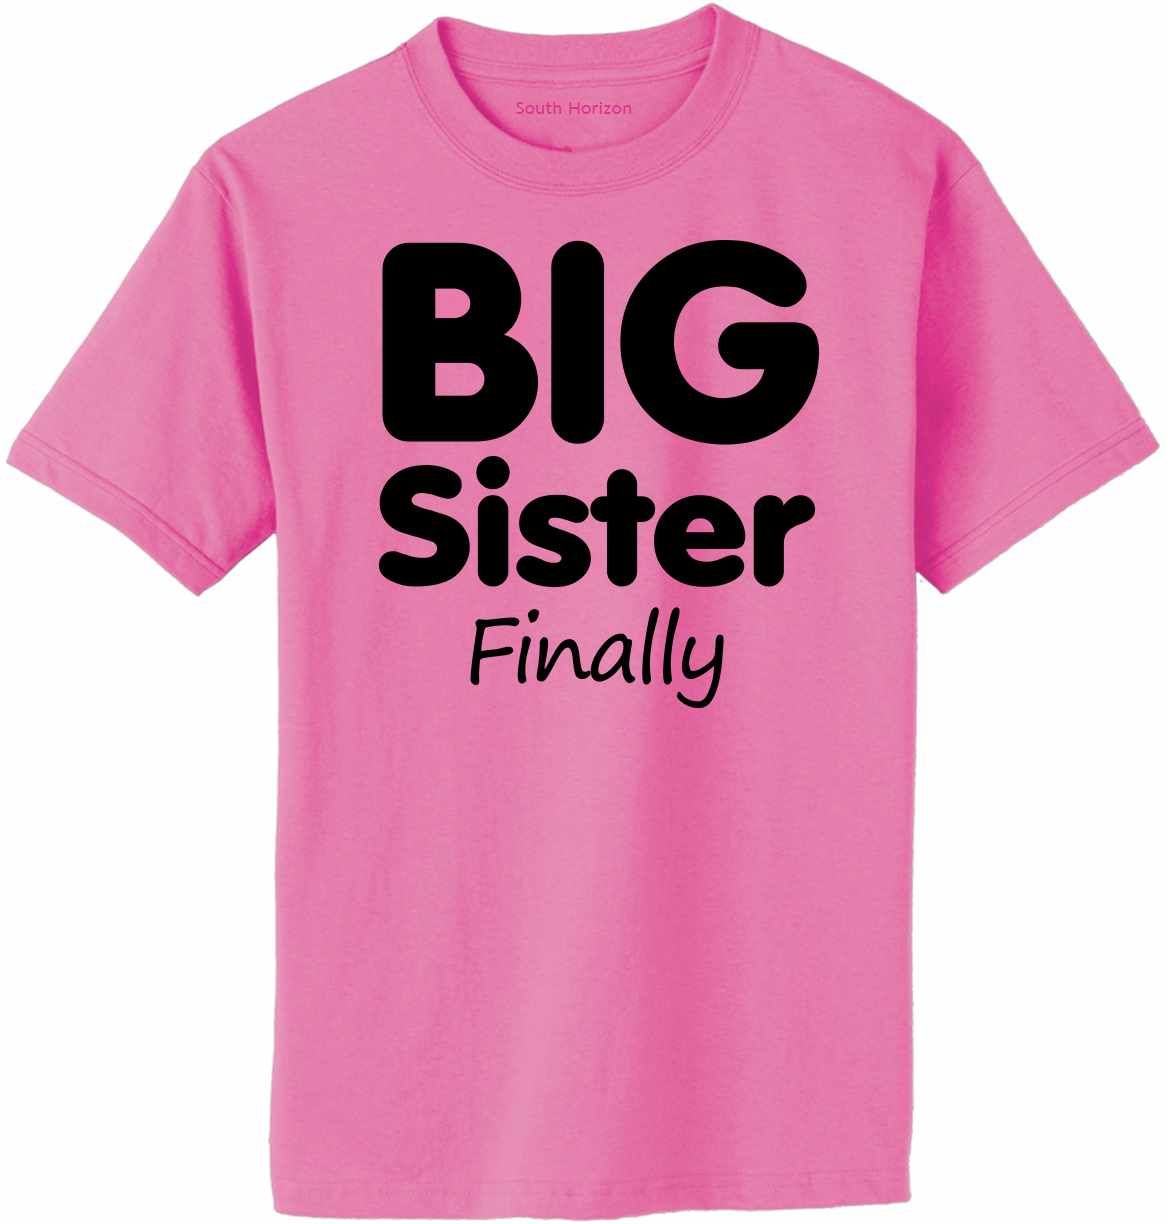 Big Sister Finally on Adult T-Shirt (#1376-1)